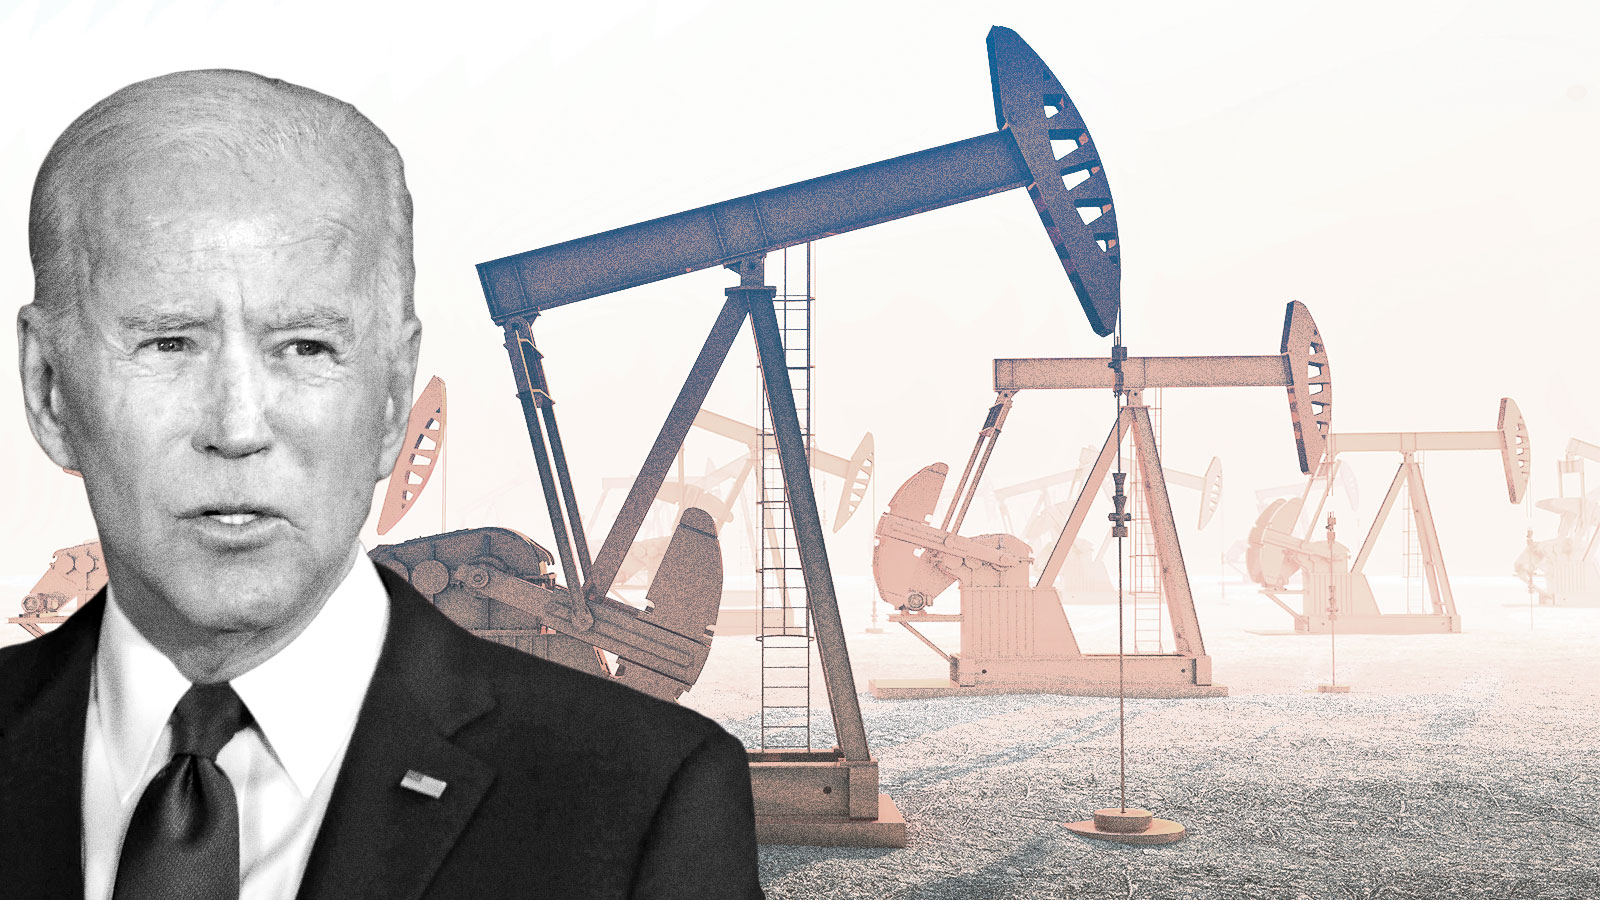 Joe Biden in front of a row of oil jacks